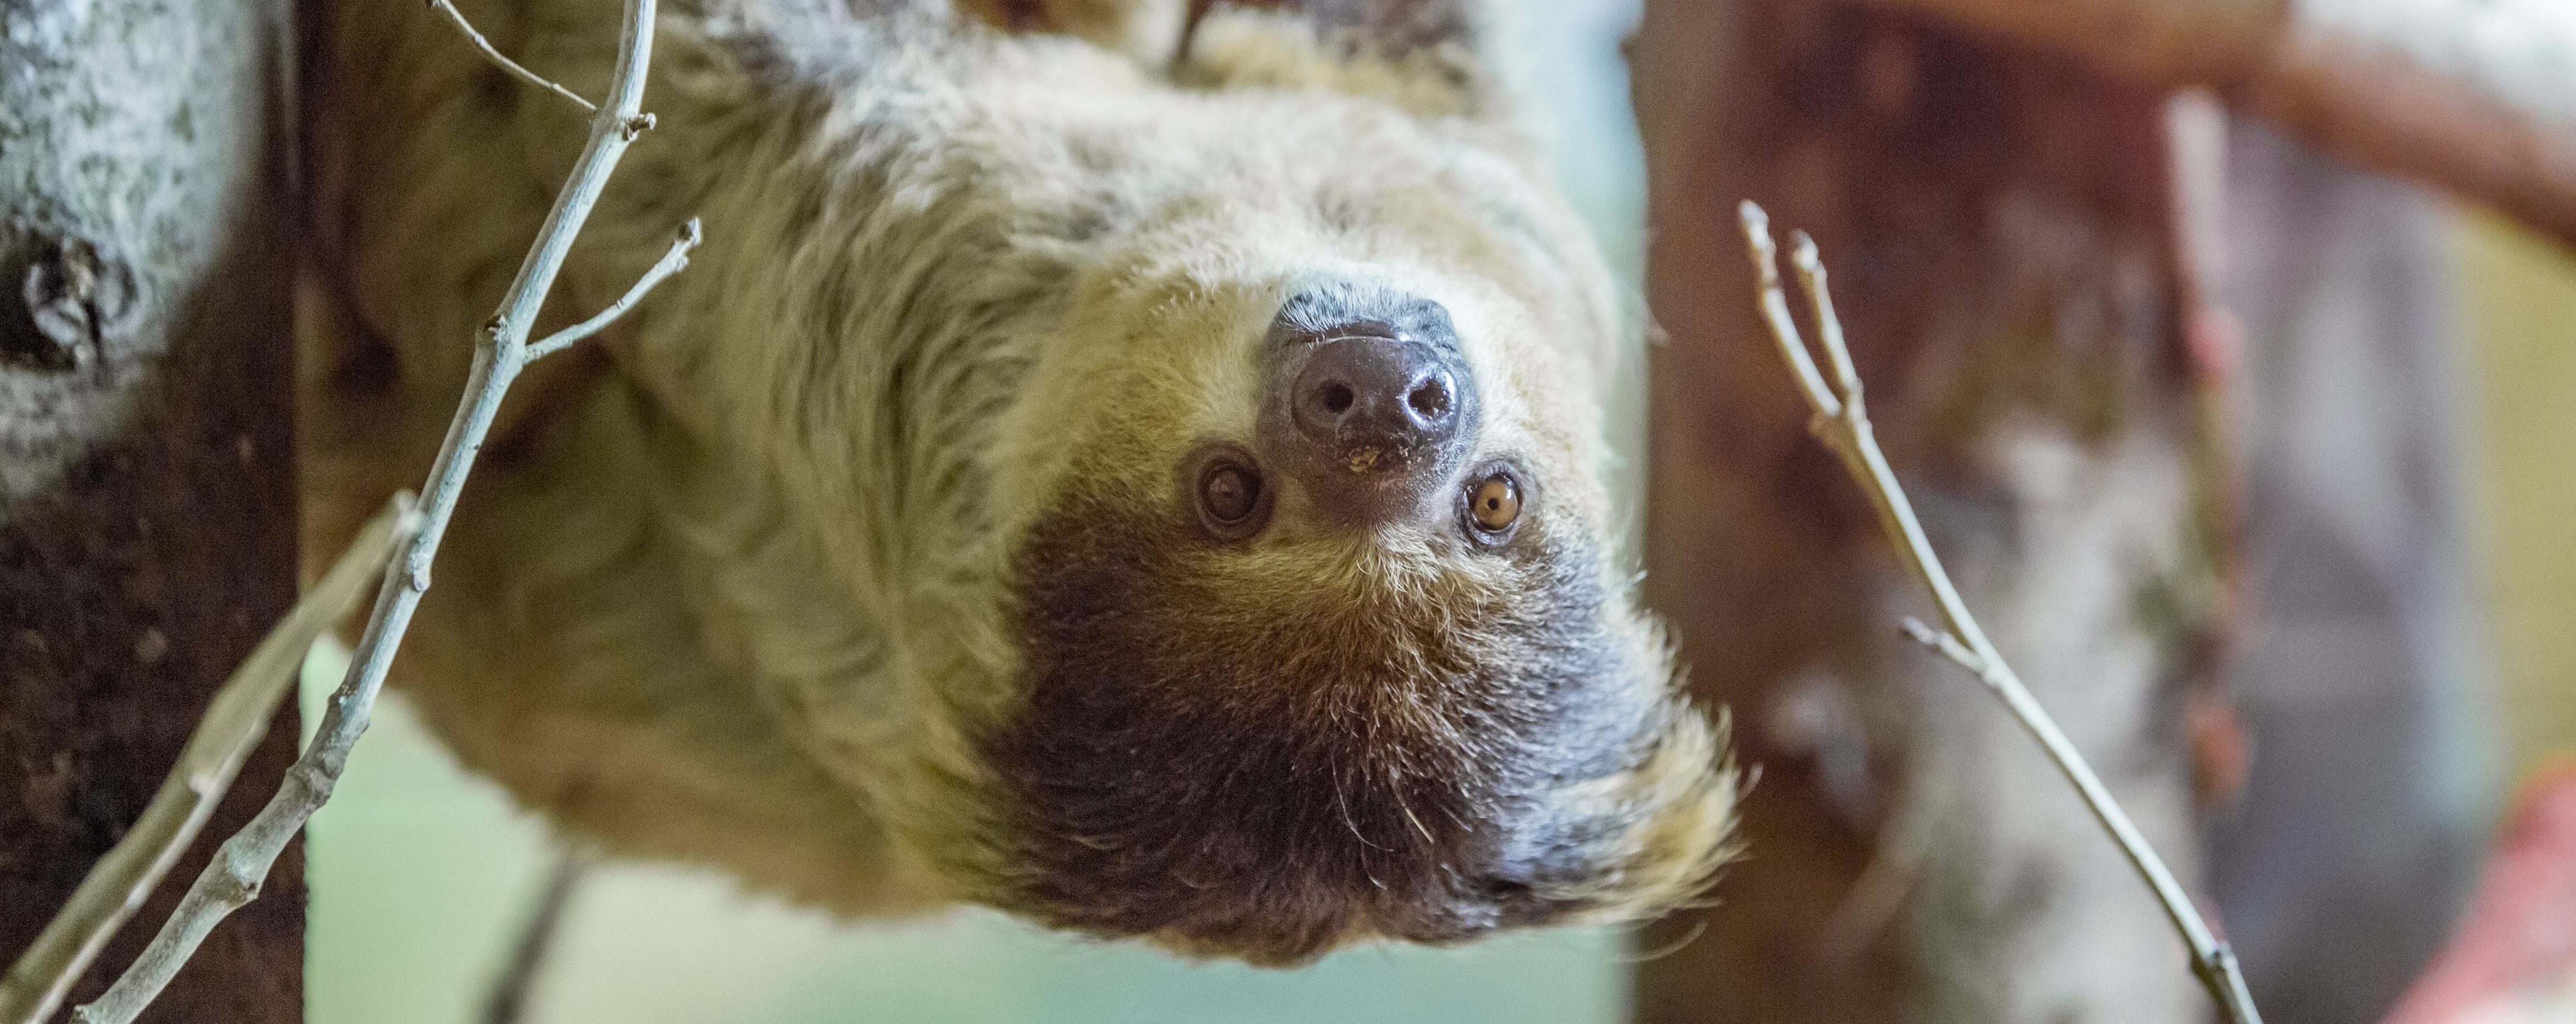 Lone sloth